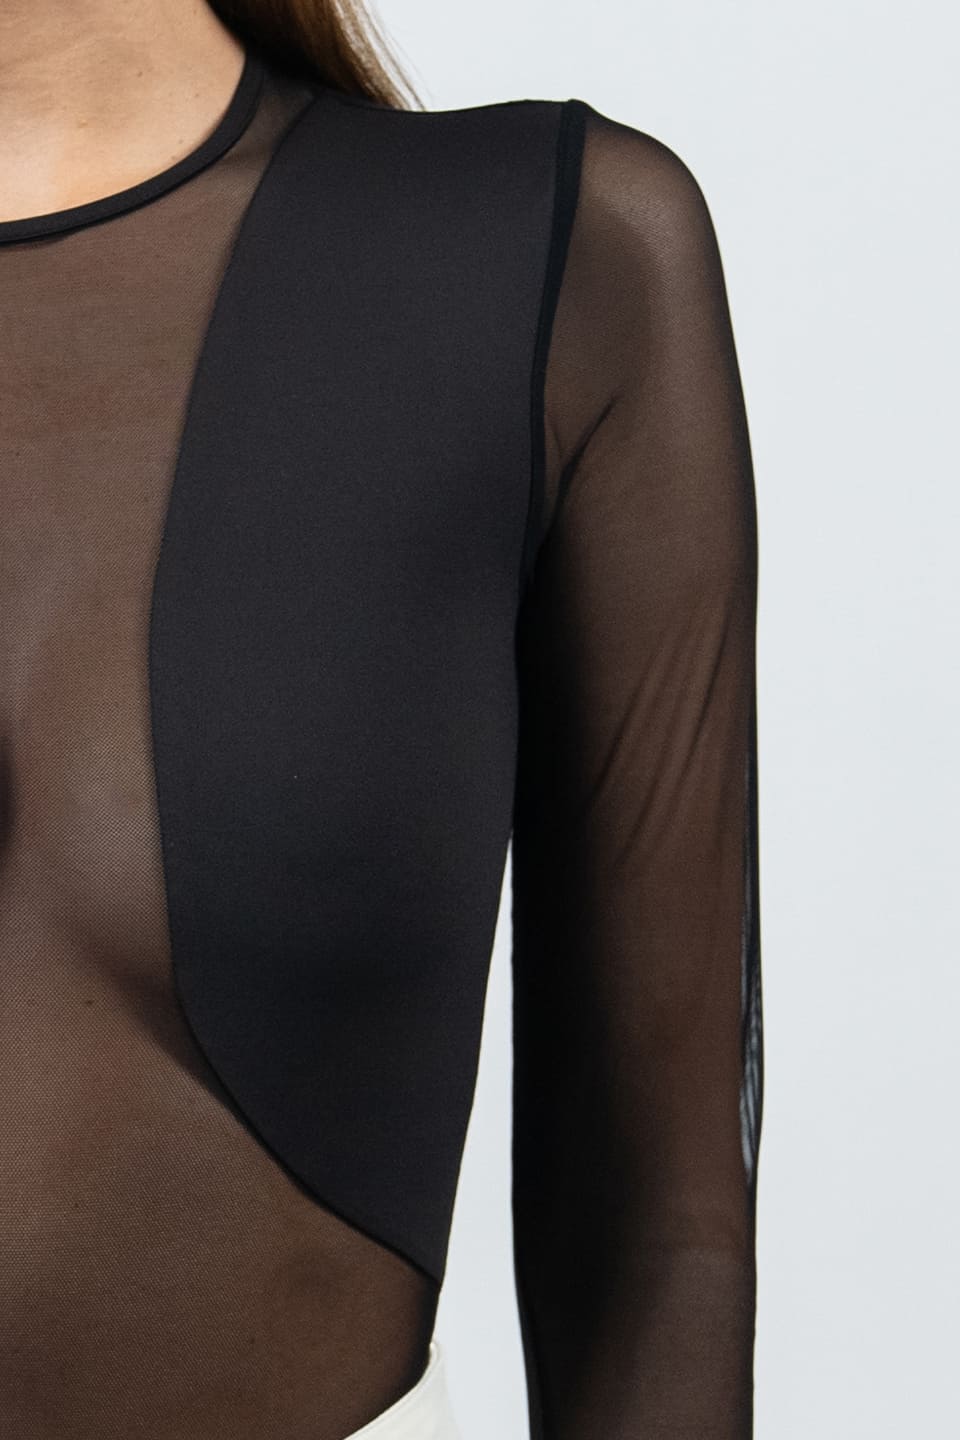 Thumbnail for Product gallery 4, Black Sheer Bodysuit